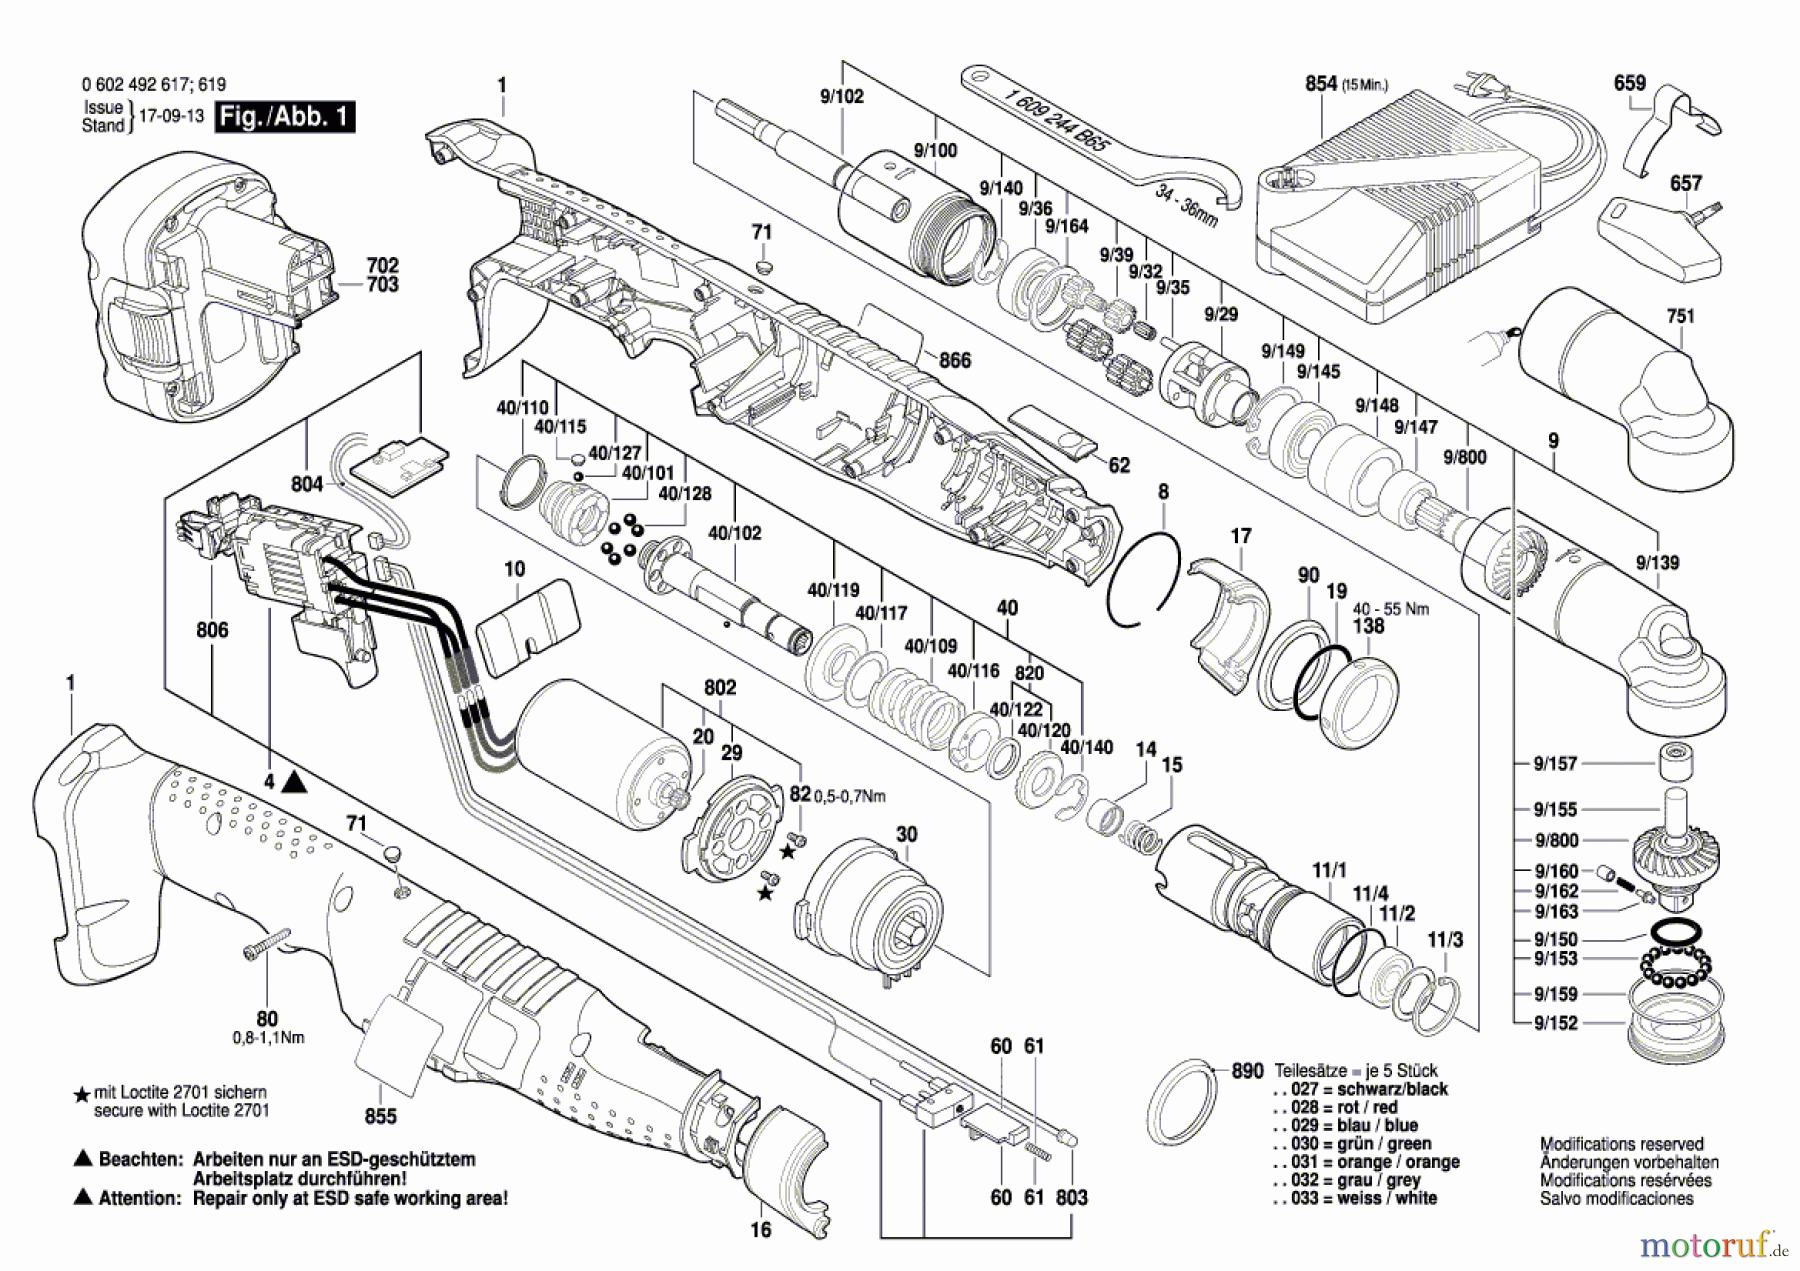  Bosch Akku Werkzeug Akku-Schrauber ANGLE EXACT 60-170 Seite 1